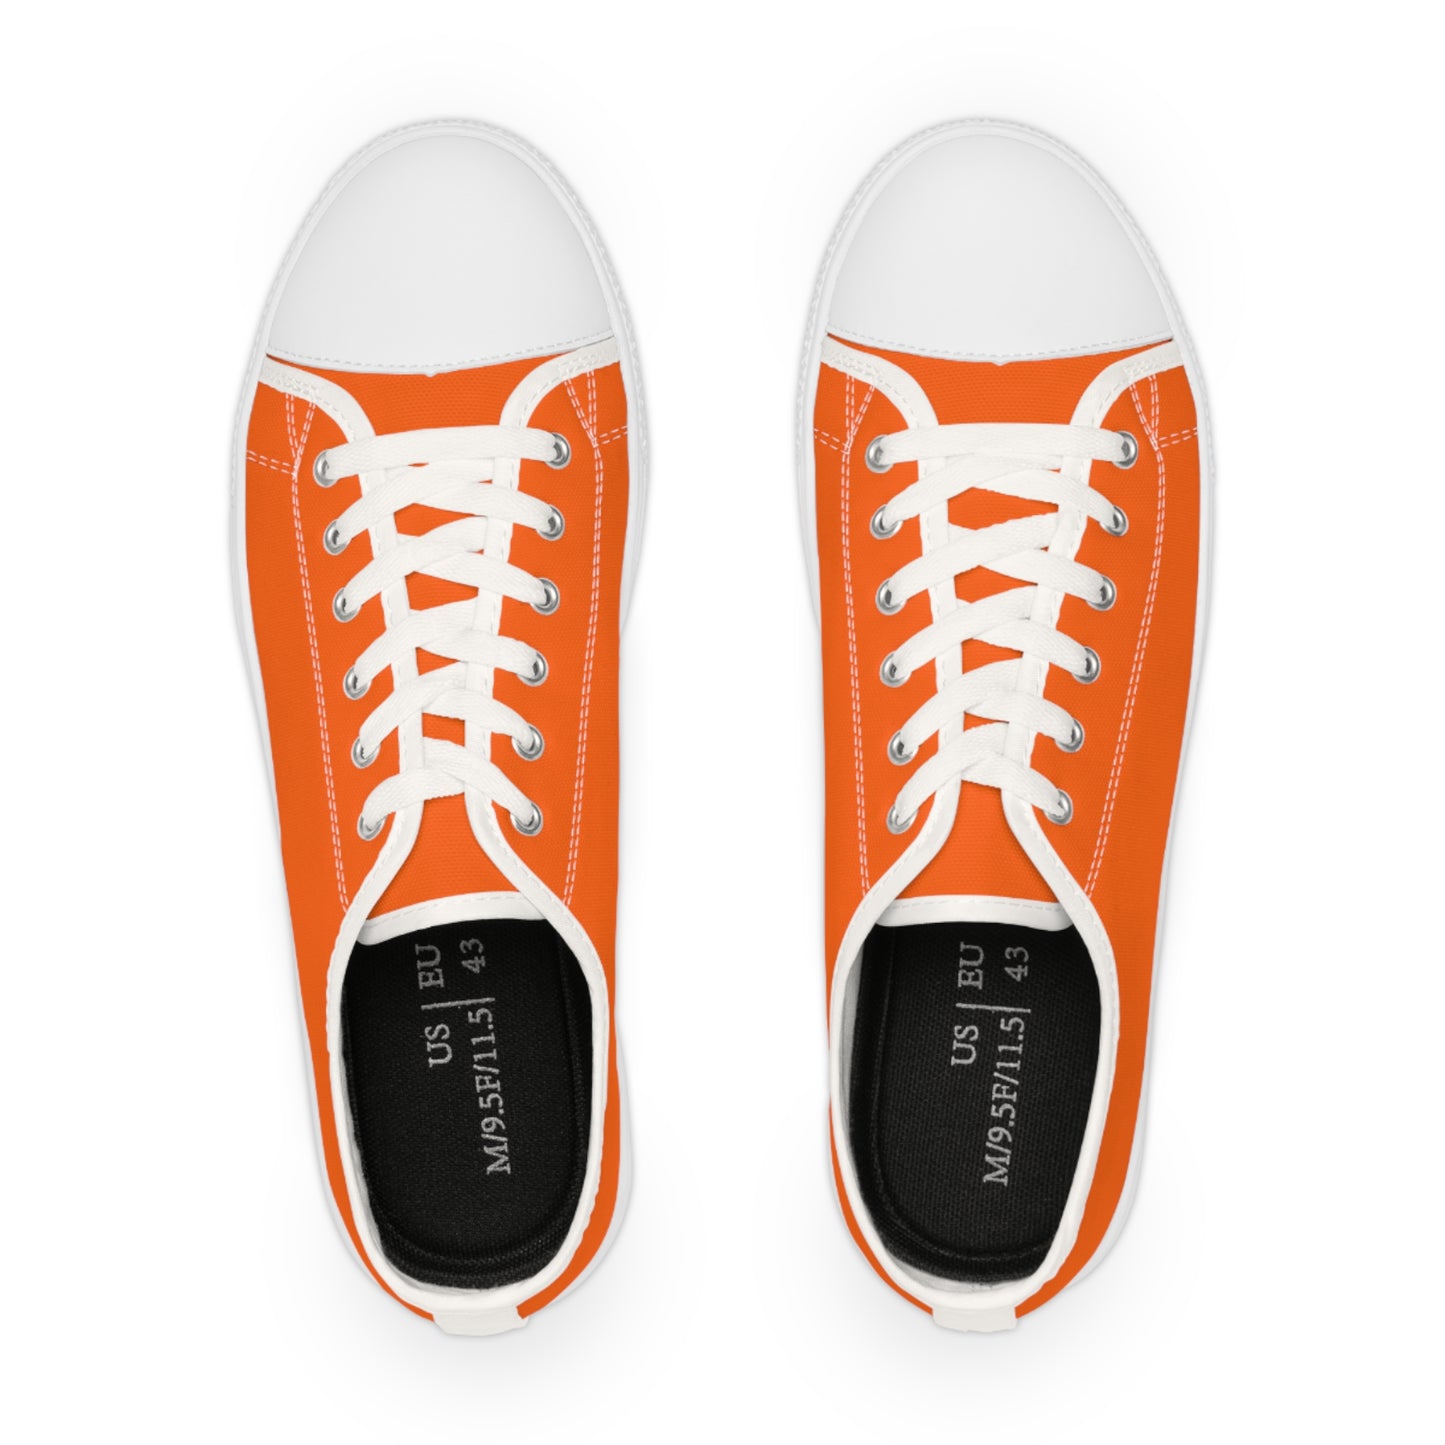 Men's Canvas Low Top Solid Color Sneakers - Electric Orange US 14 Black sole